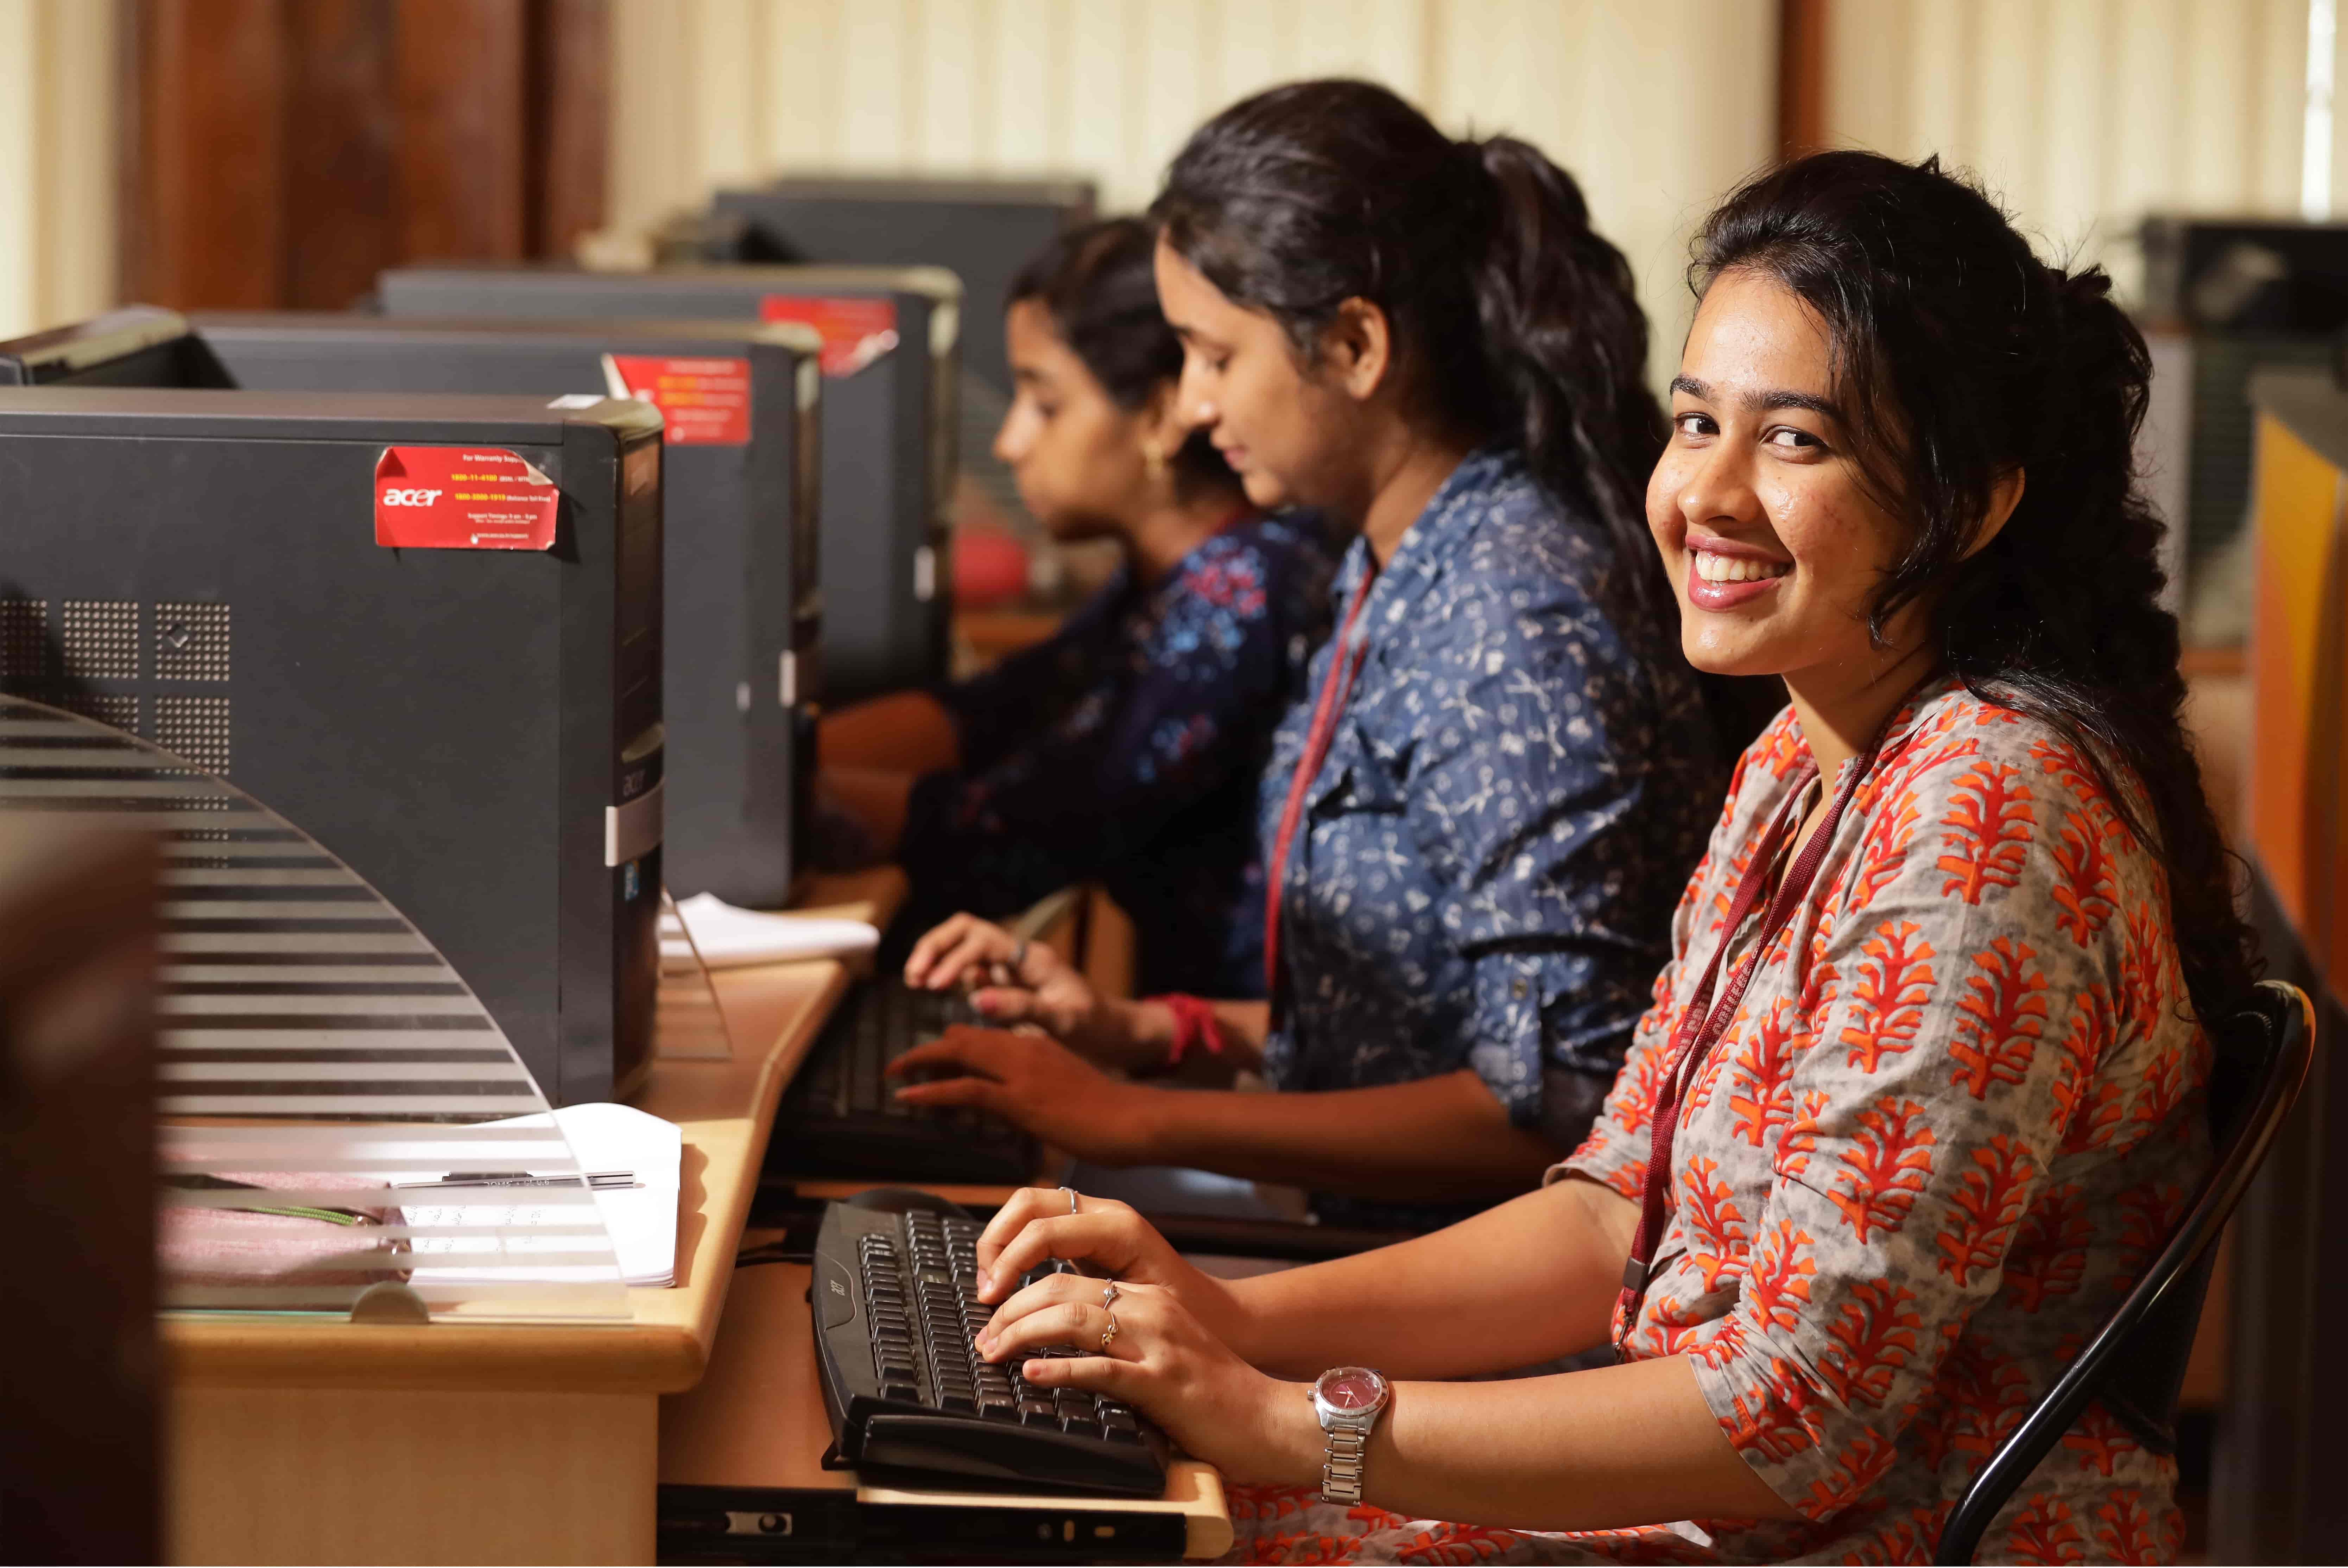 Village woman. Women in Computer Science. Stanford women in Computer Science. Using Computer indian. Teacher with Computer 1080x1920.